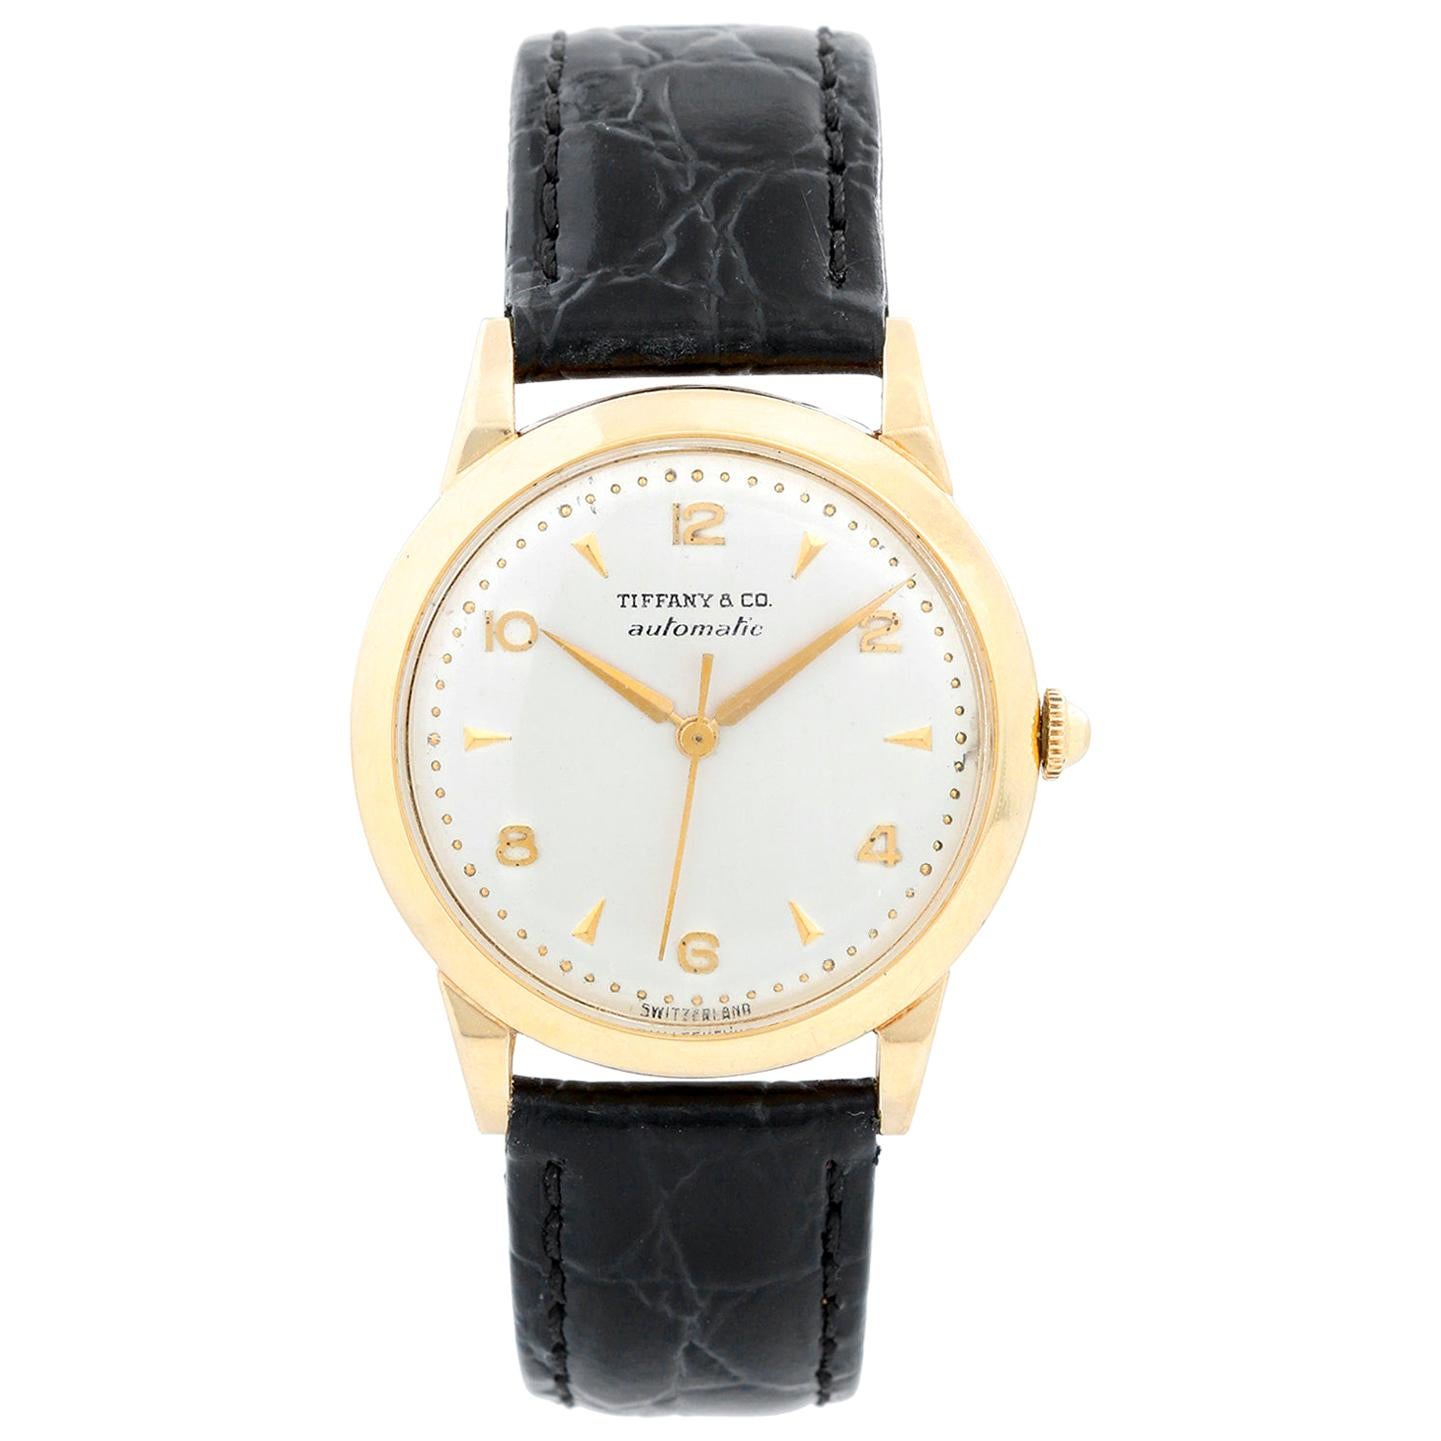 Tiffany & Co. Vintage Automatic Movado Movement  Unisex Watch